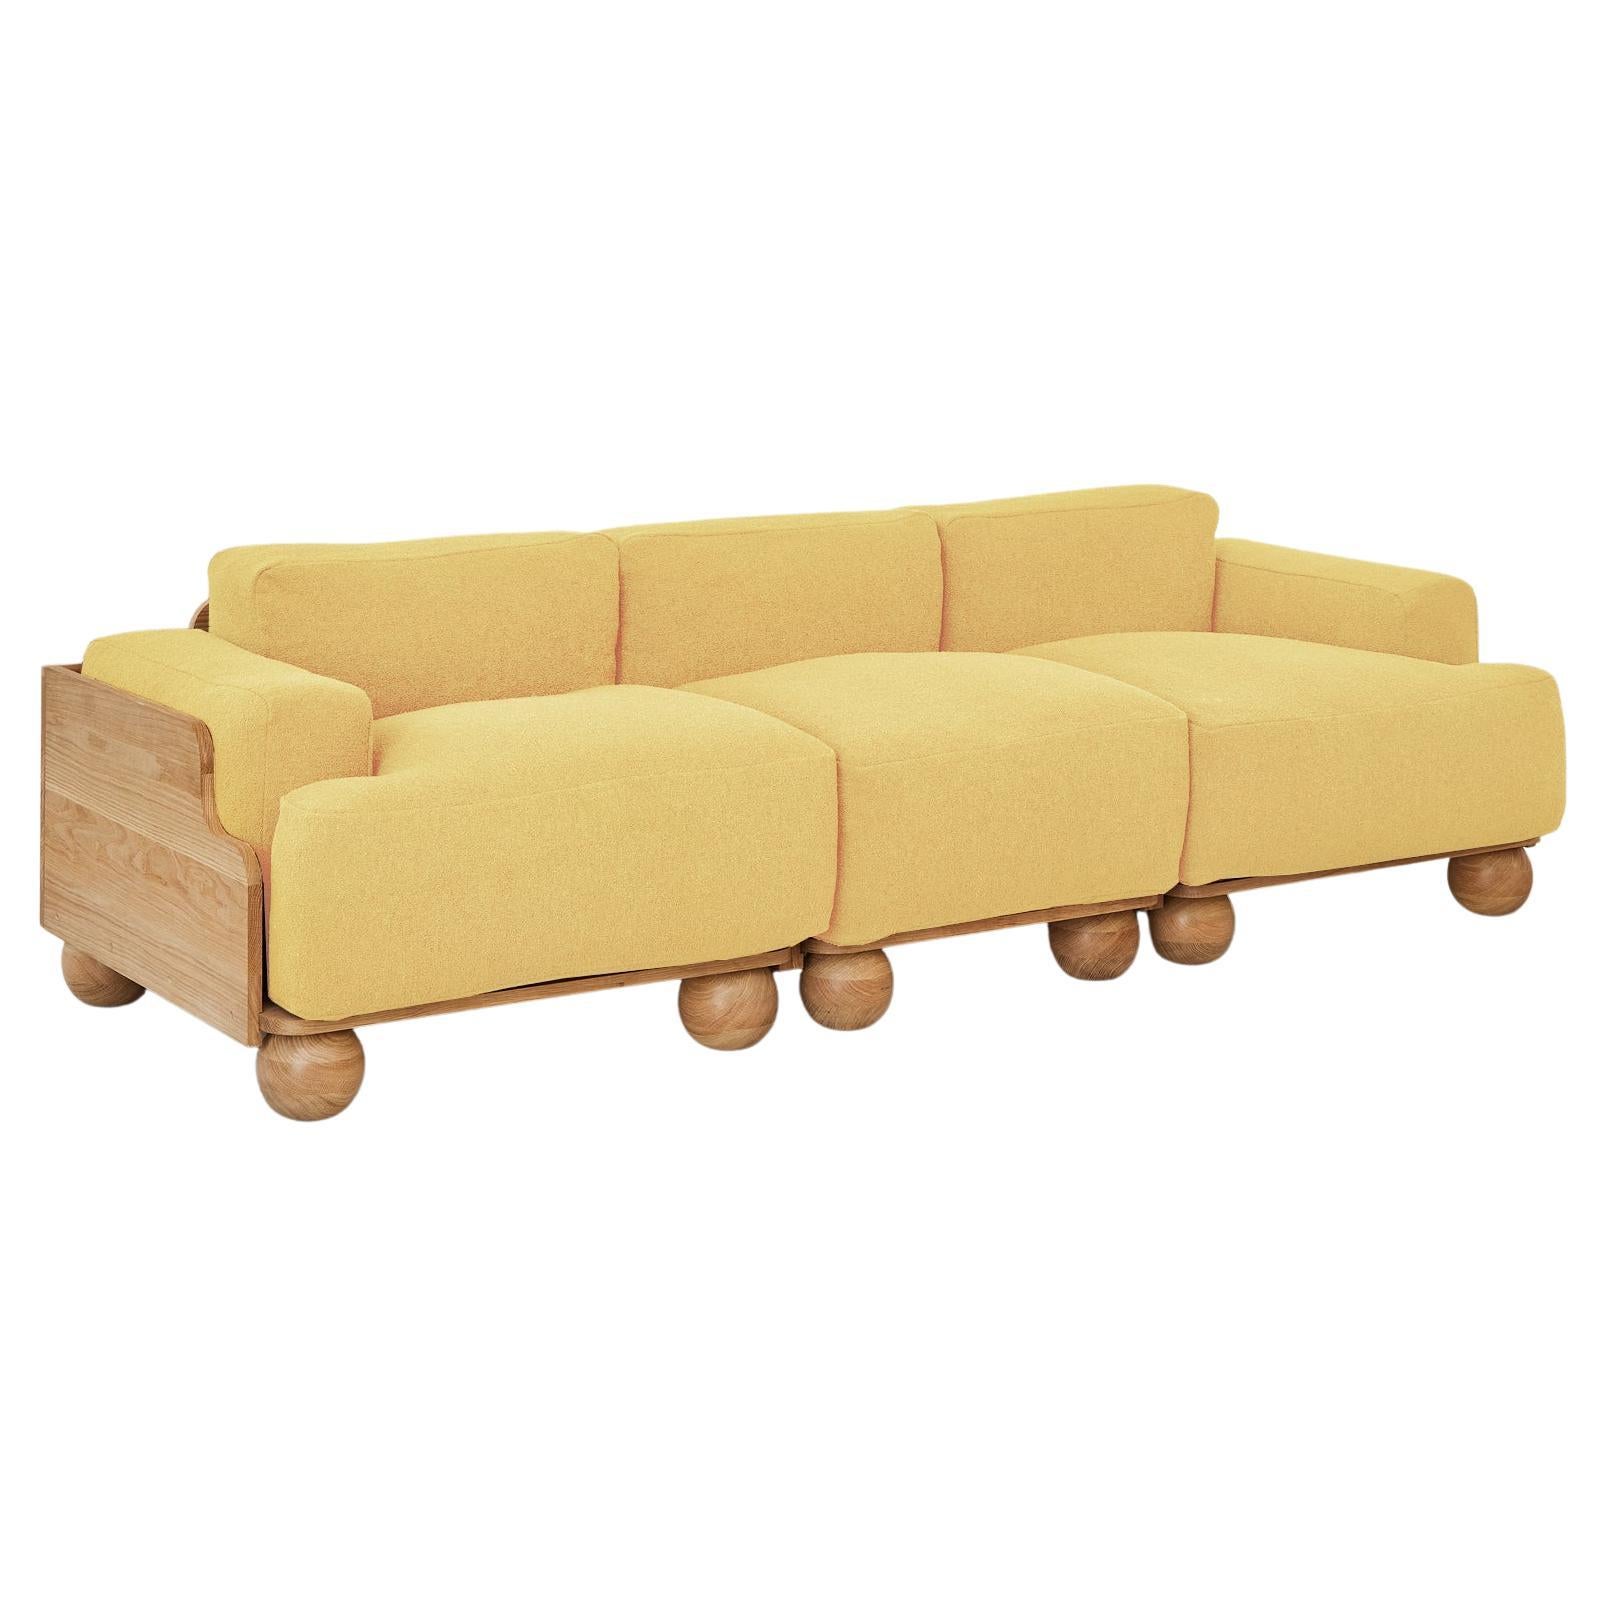 Cove 3.5 Seater Sofa in Straw Yellow